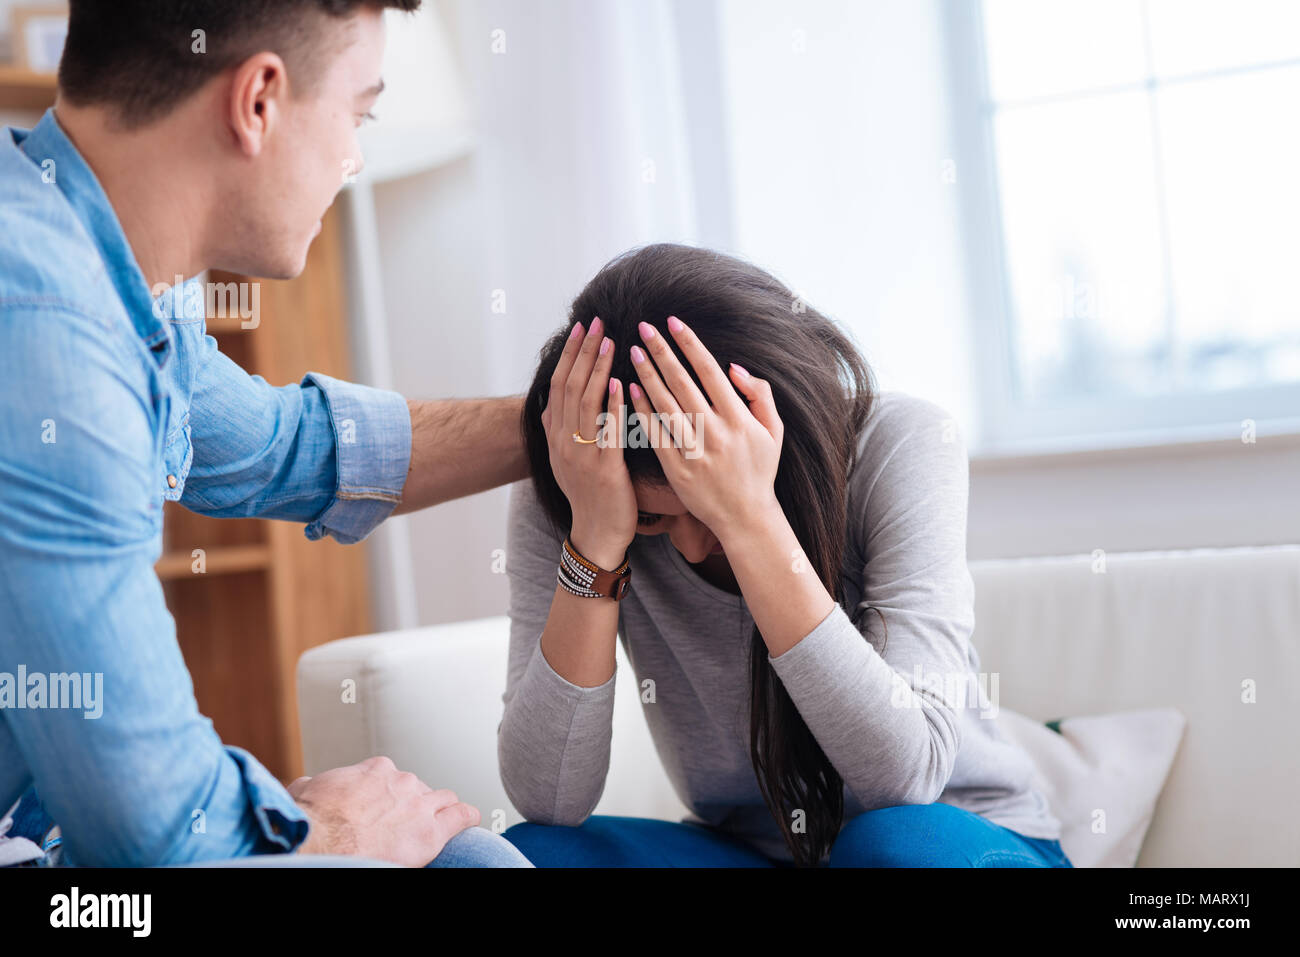 Man calming down upset depressed woman Stock Photo